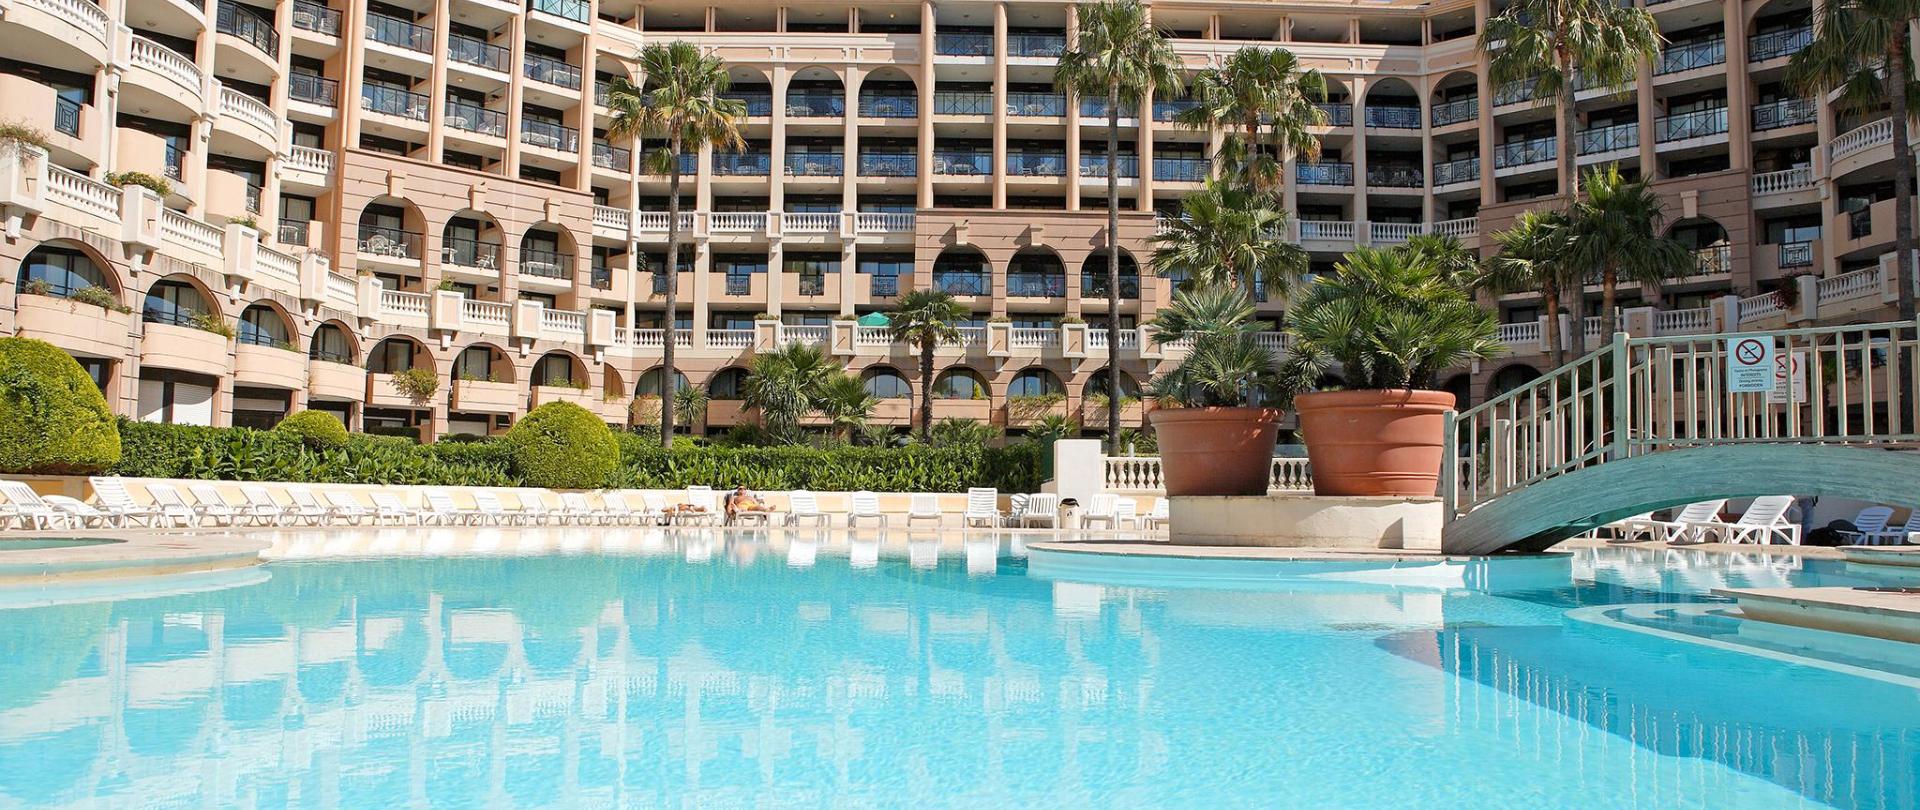 Hotel-La-Palma Azur-Cannes-Verrerie.jpg